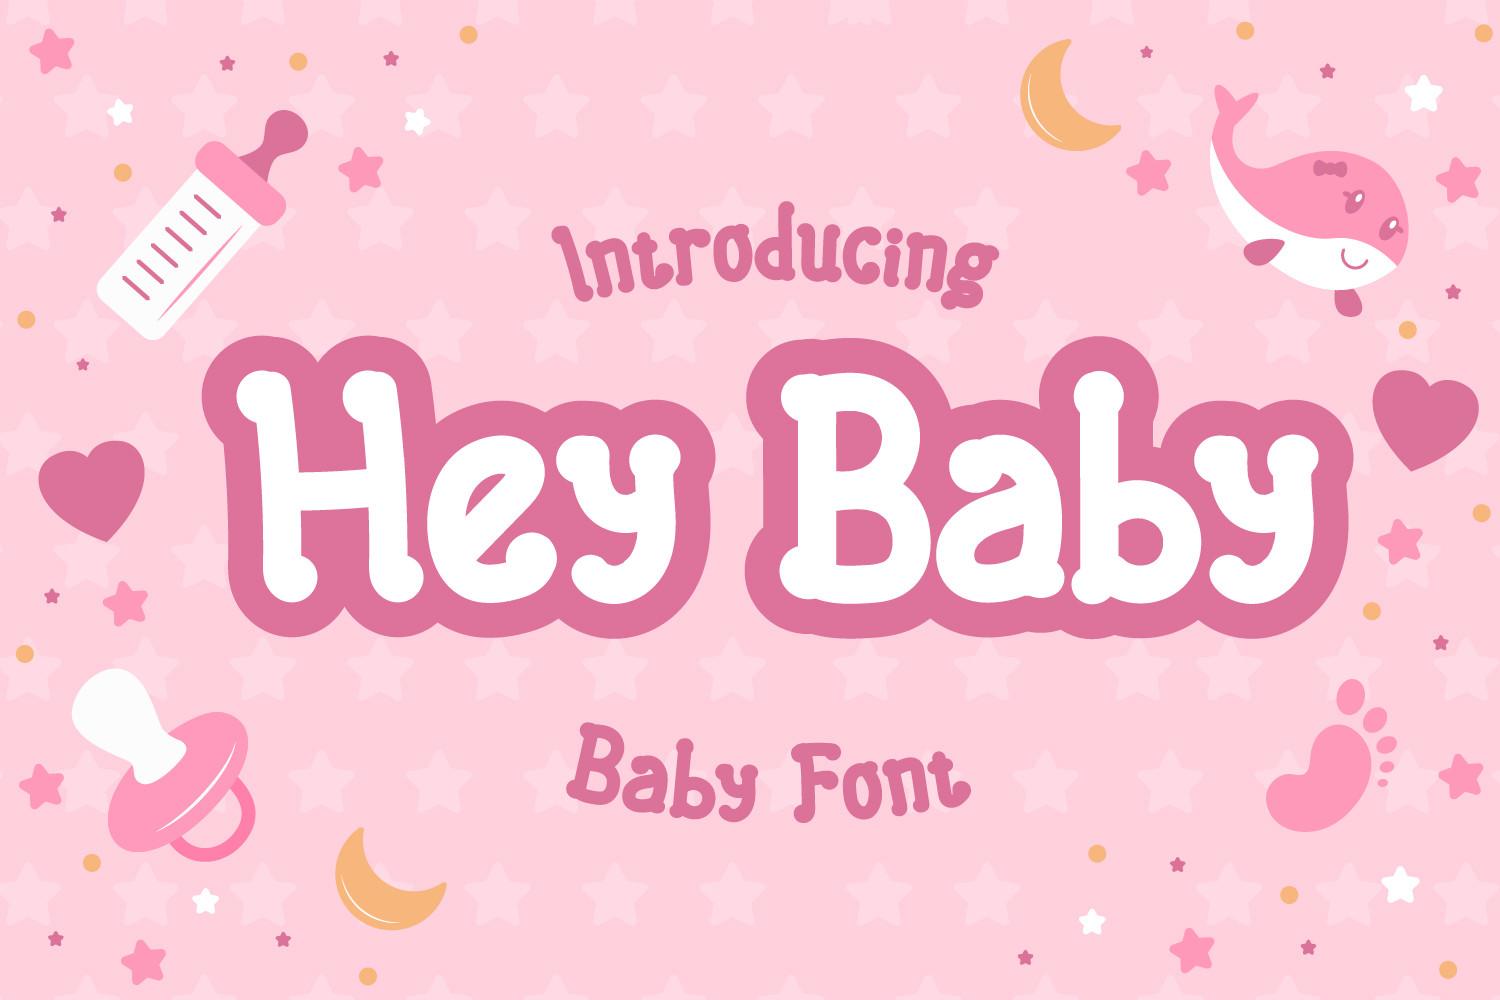 Hey Baby Font